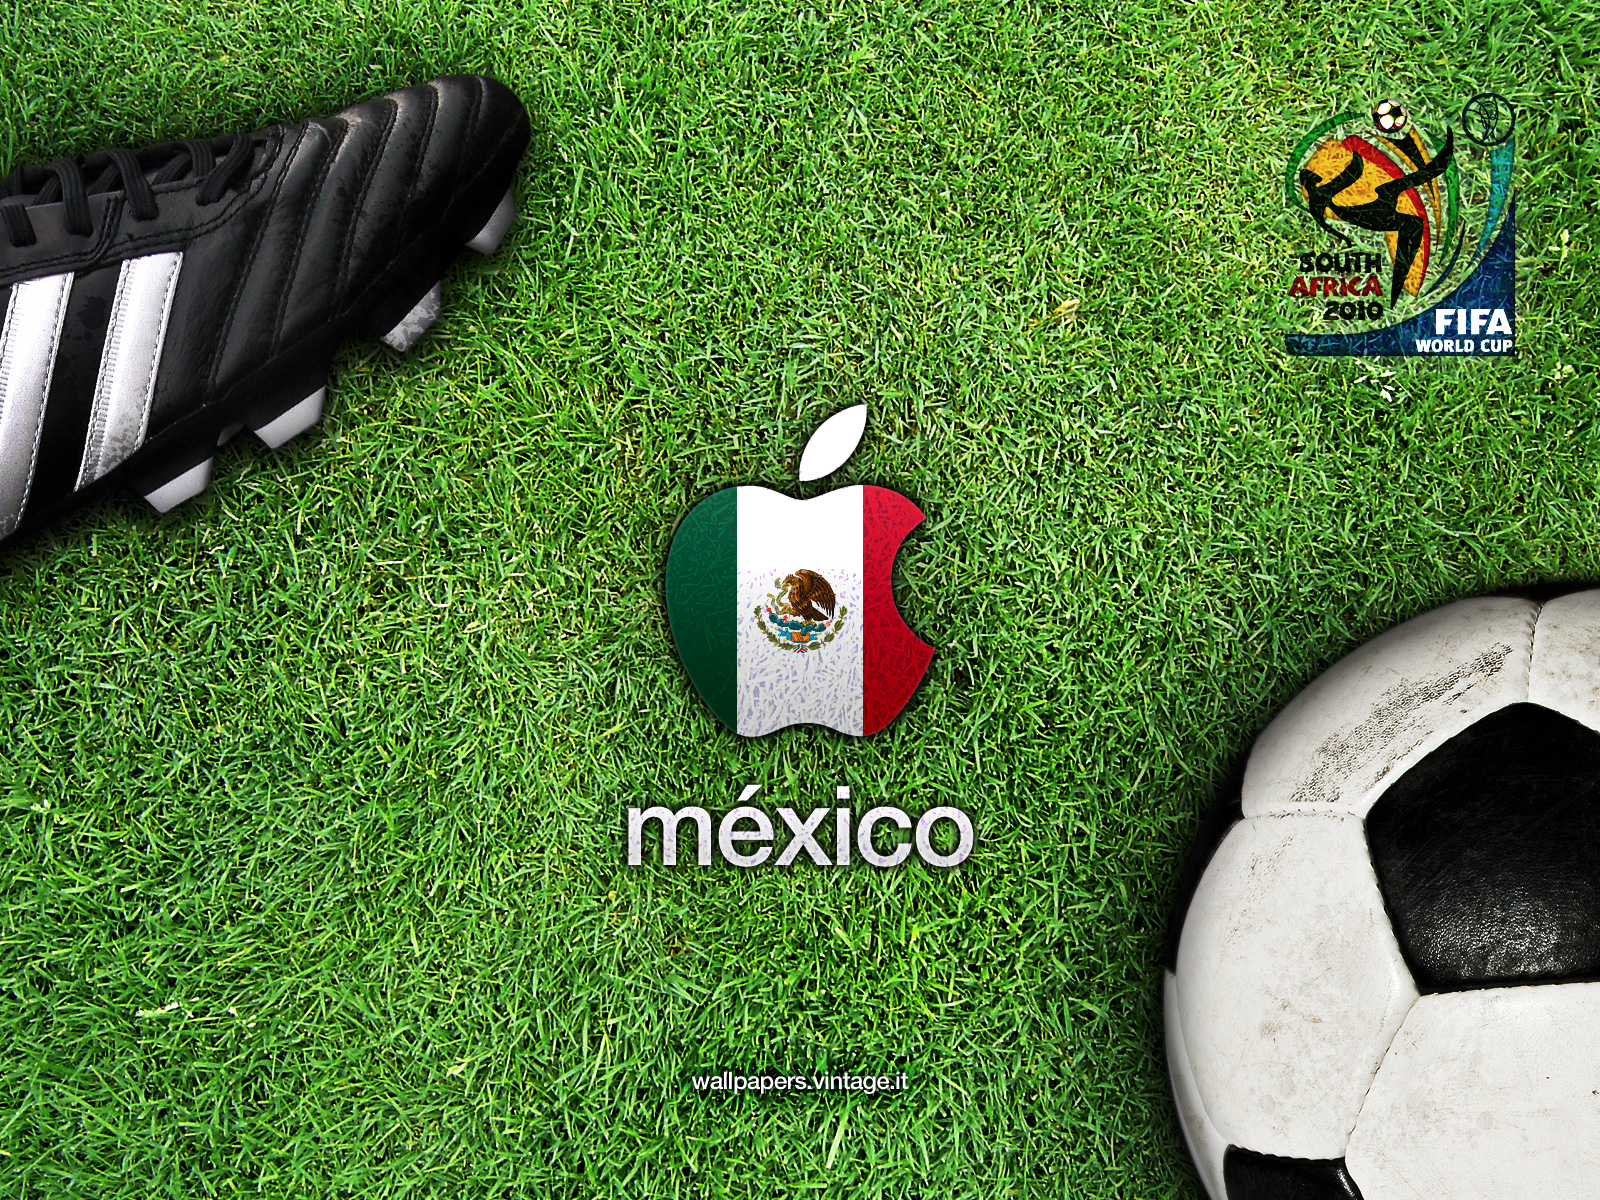 Mexico Fifa World Cup wallpaper - Free Desktop HD iPad iPhone